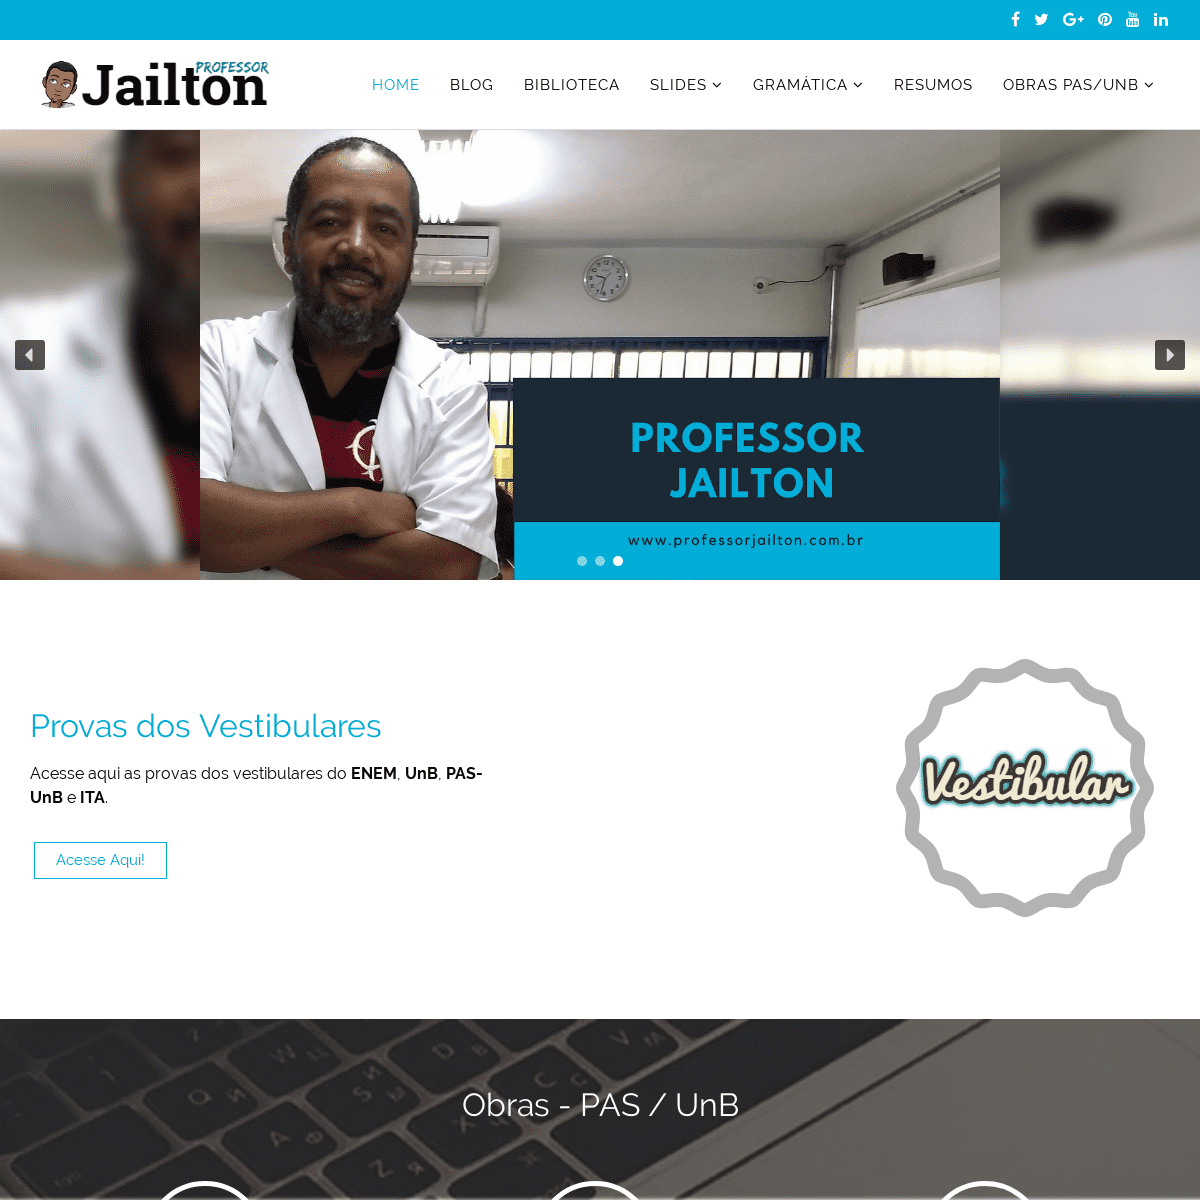 Professor Jailton